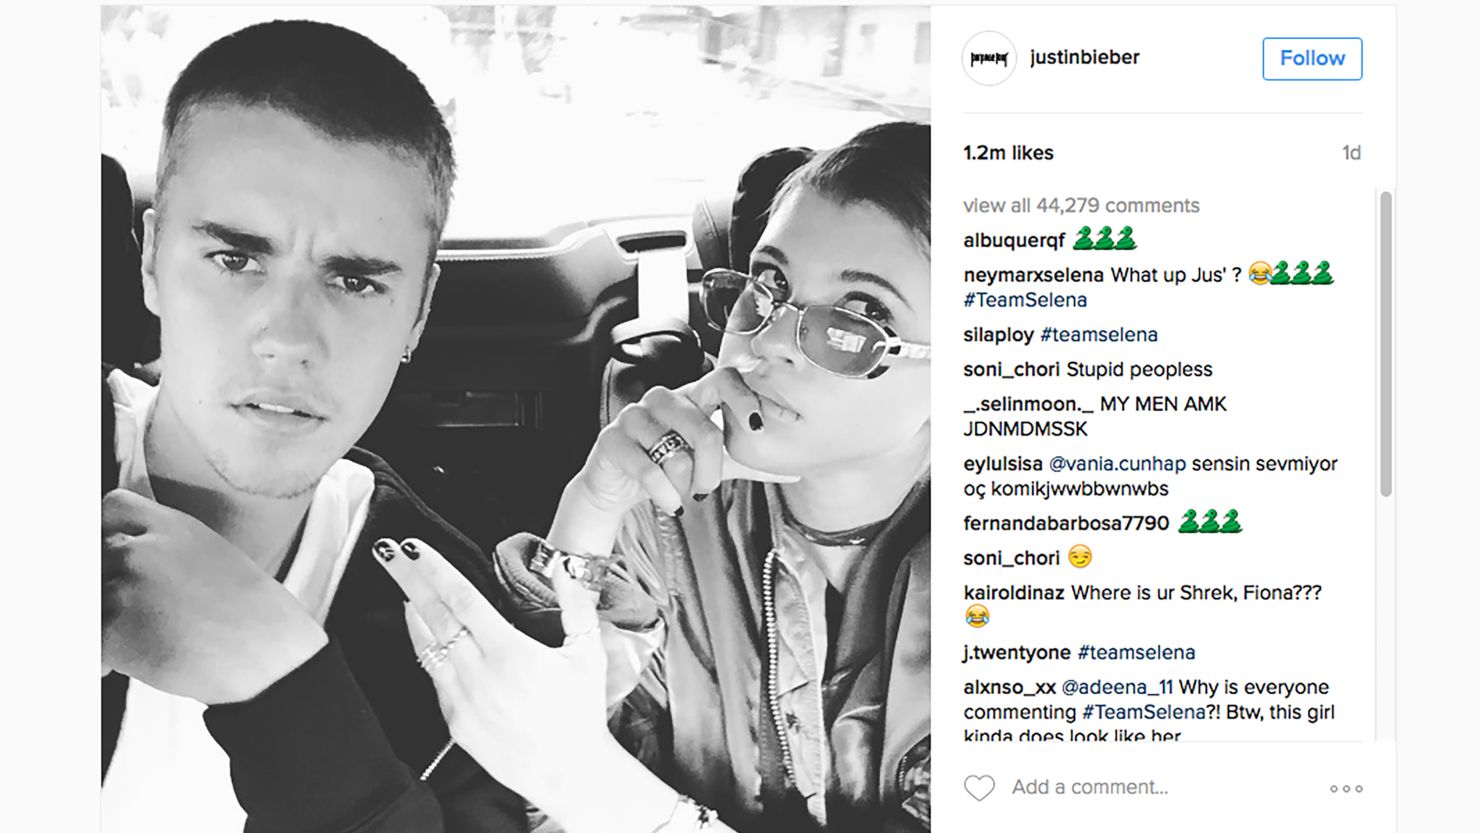 Justin Bieber got upset after some fans slammed his friend Sofia Richie on Instagram.